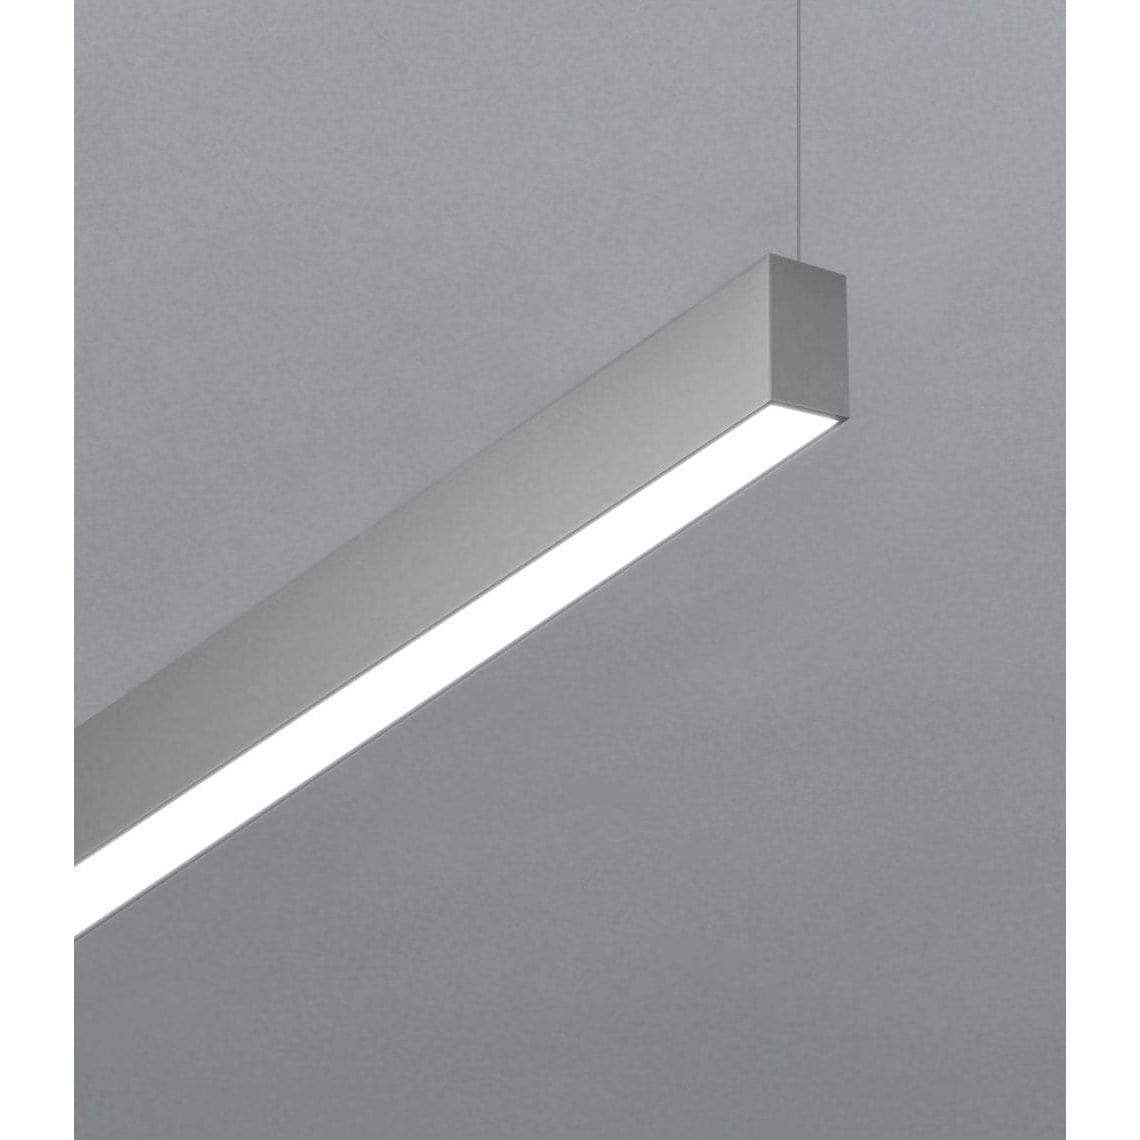 POE Texas Lighting Denton Suspended Linear PoE Lights - Sample 1.3" x 8' Linear Diffuser 8 ft, 5000K (Surface)